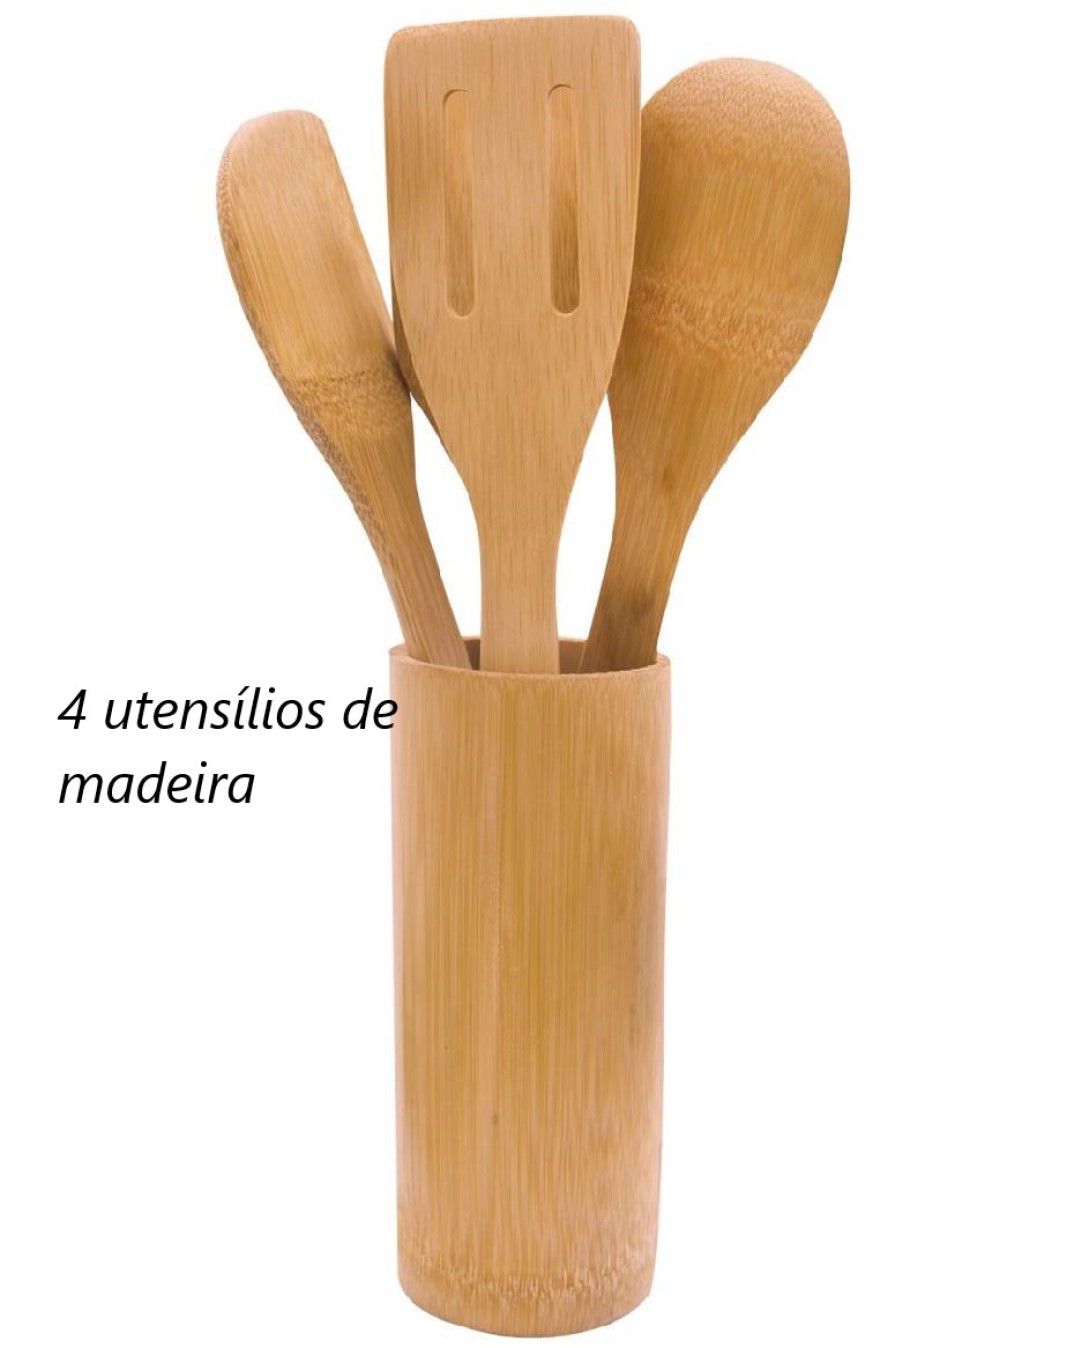 Jogo utensílios de bambu ecológico 4 peças MimoStyle mimo5482